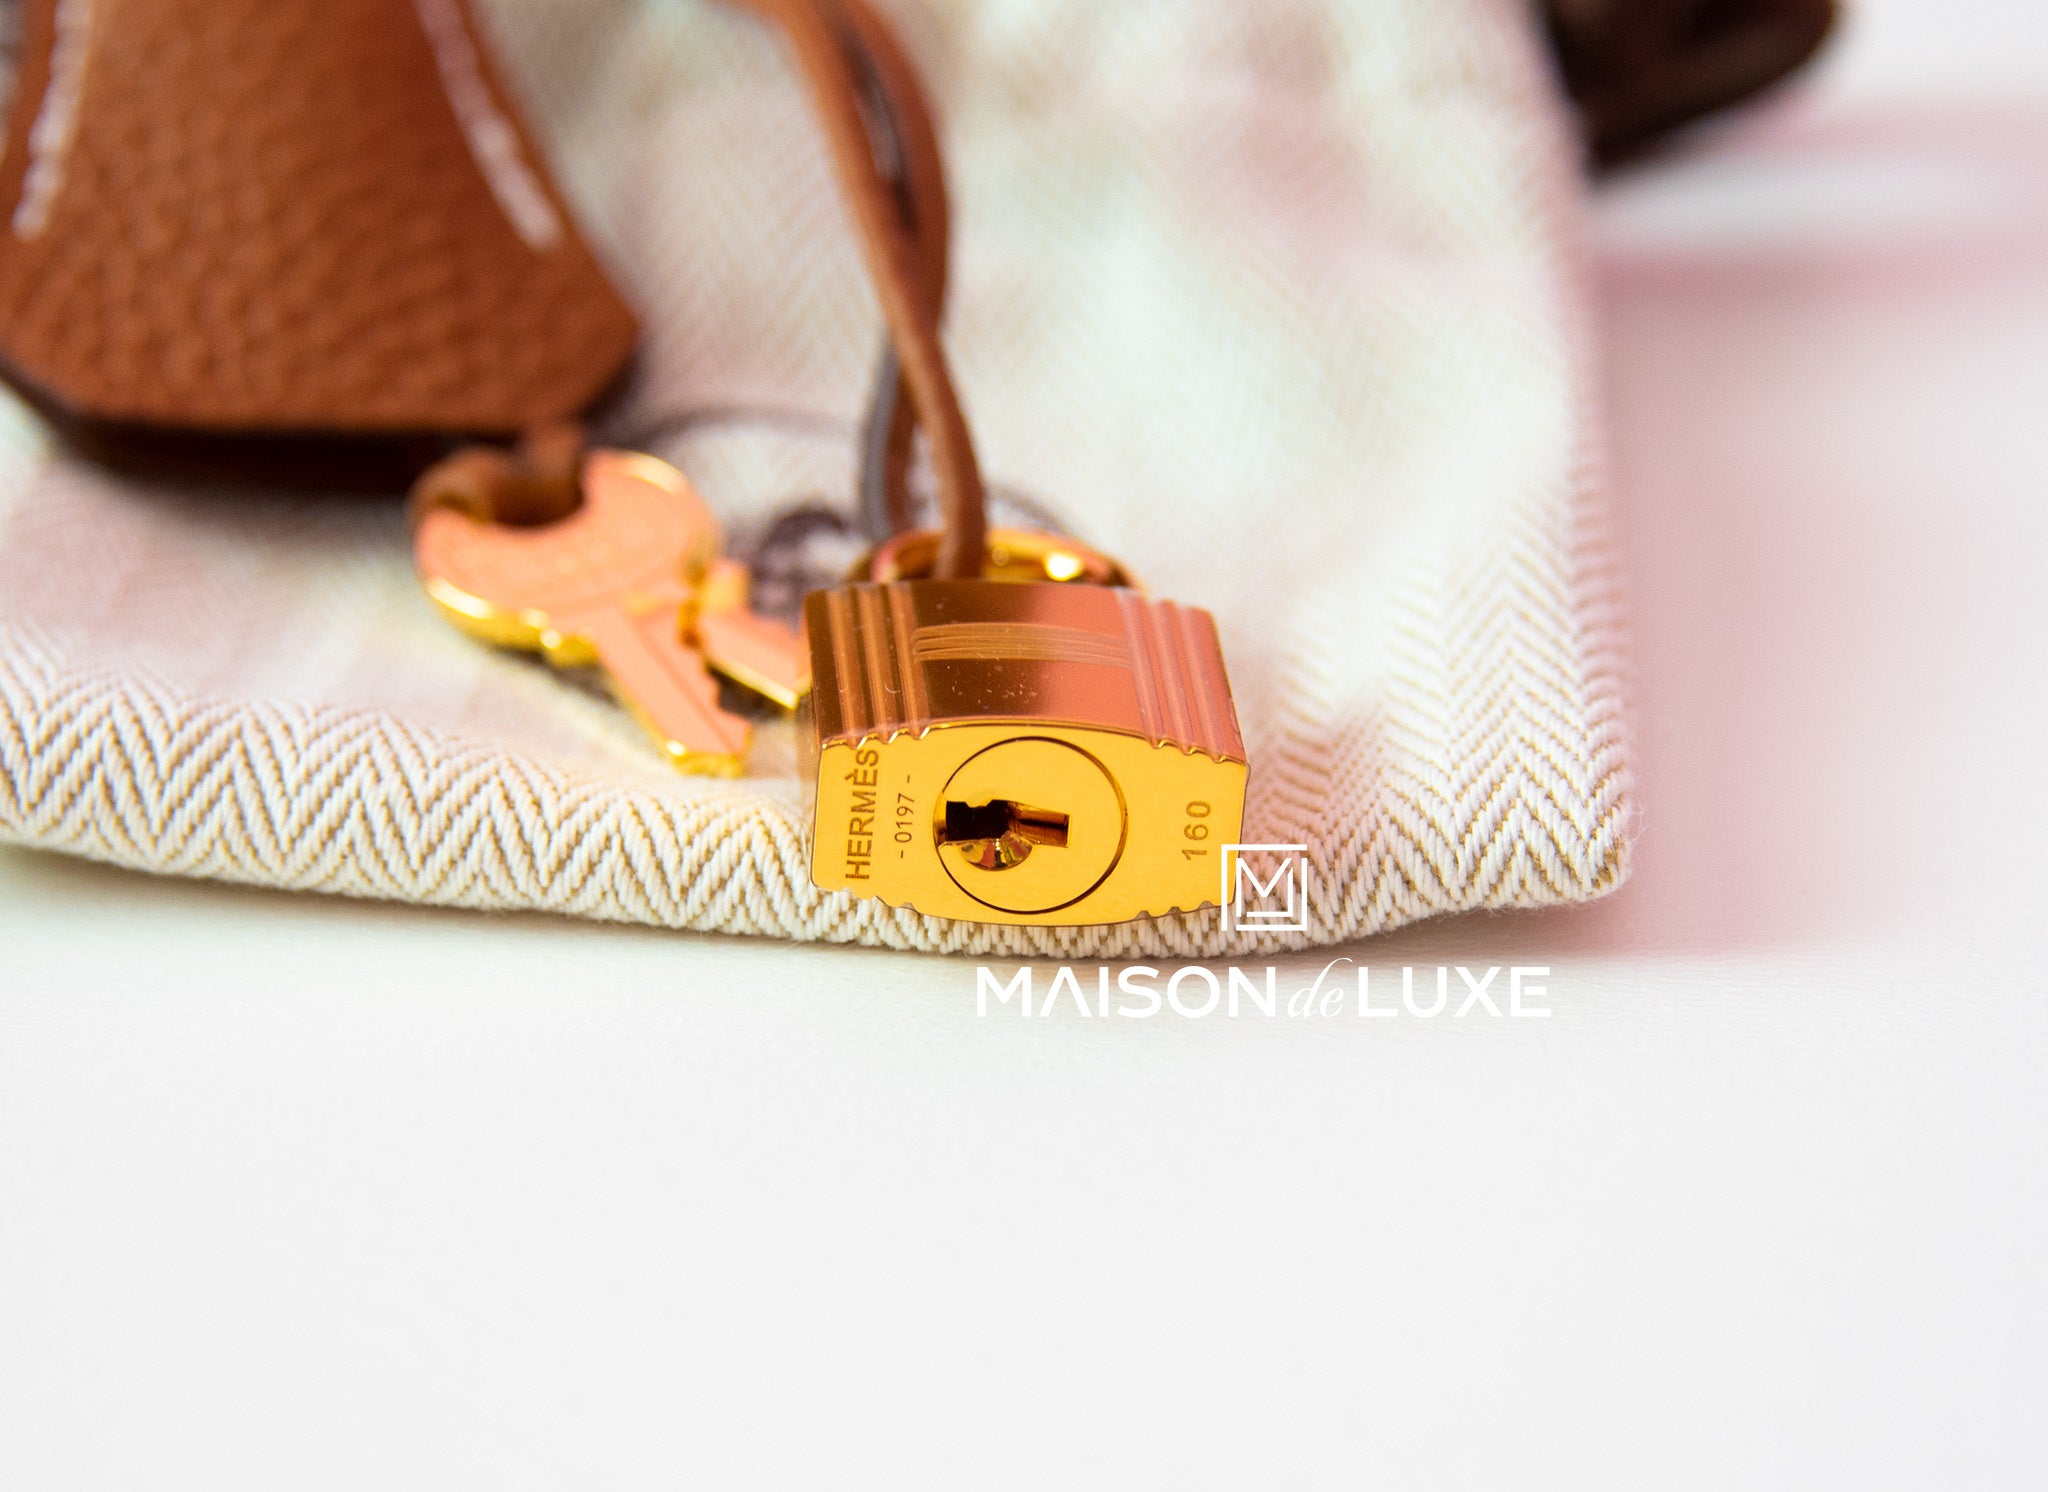 Hermes Kelly Handbag Grey Togo with Gold Hardware 28 Gray 217940459